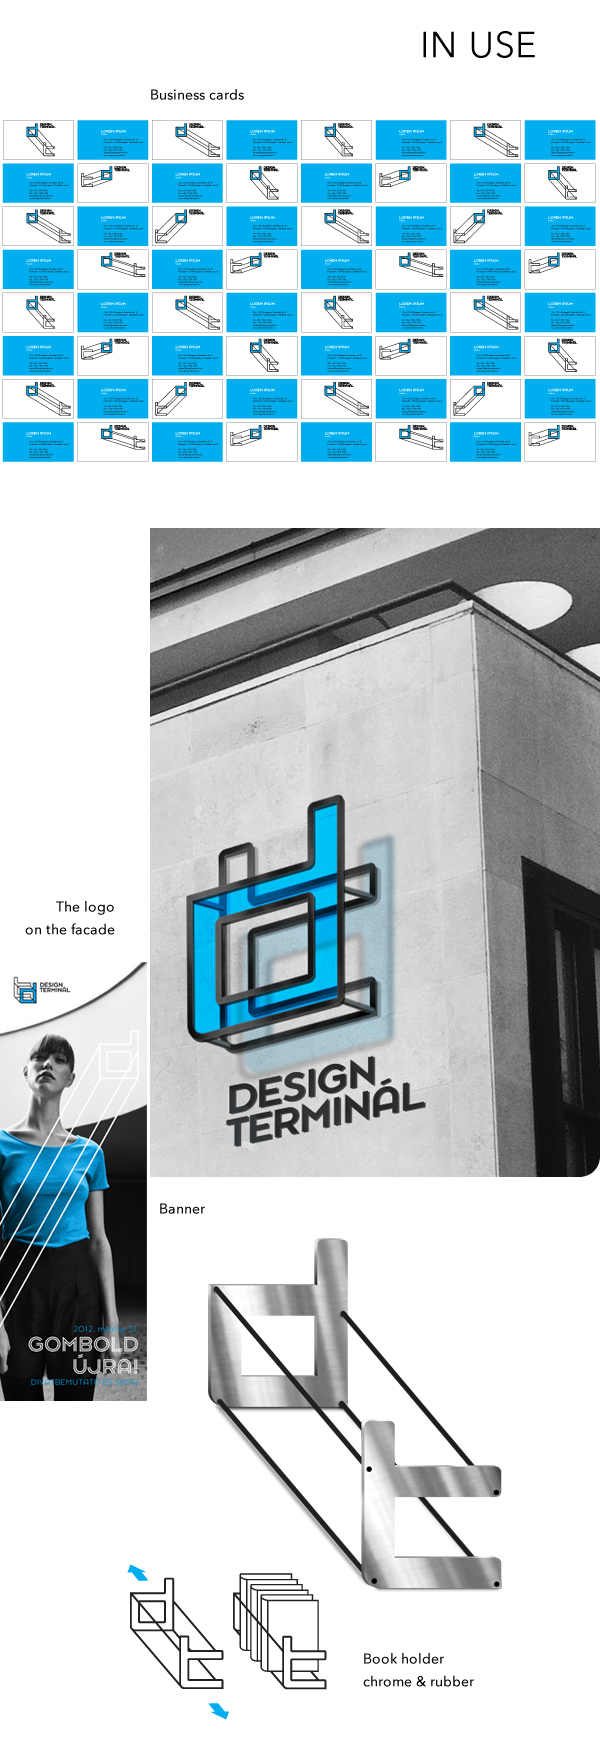 design  logo bauhaus breuer design terminal Typeface budapest kothay